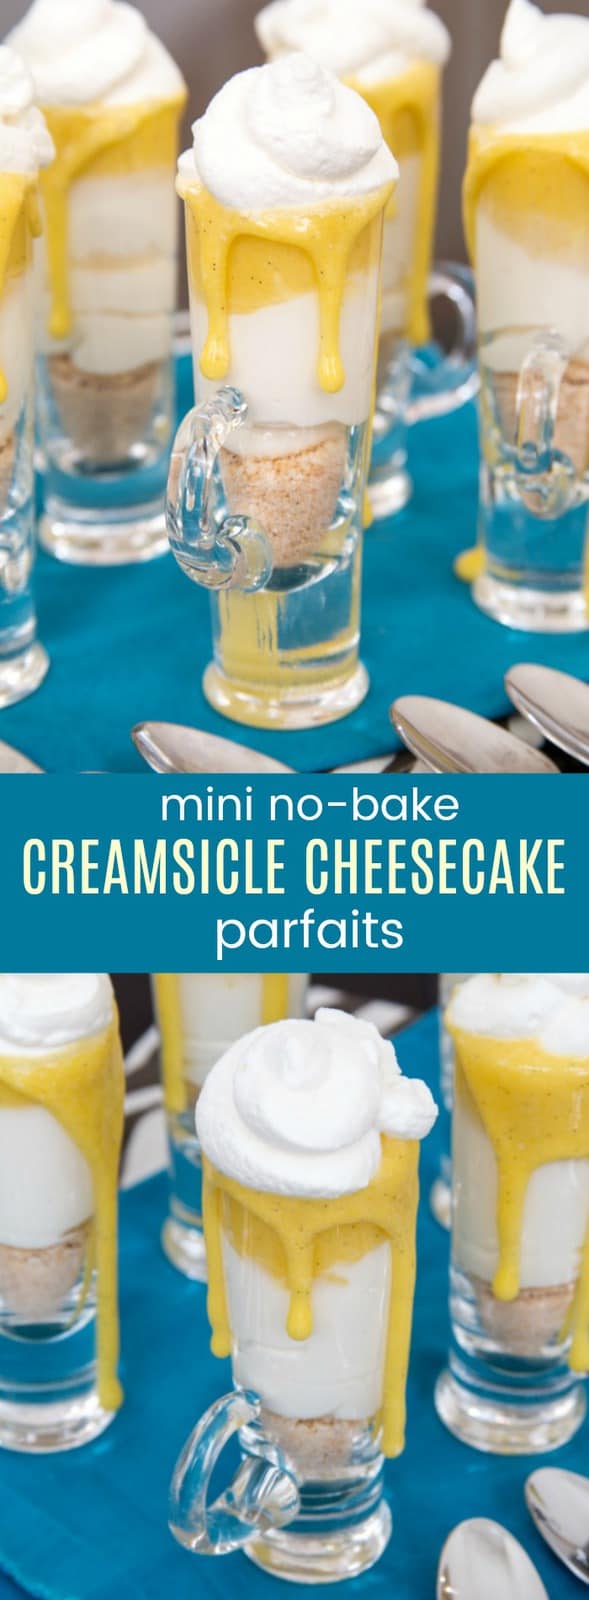 Mini No-Bake Creamsicle Cheesecake Parfaits - gluten-free dessert recipe